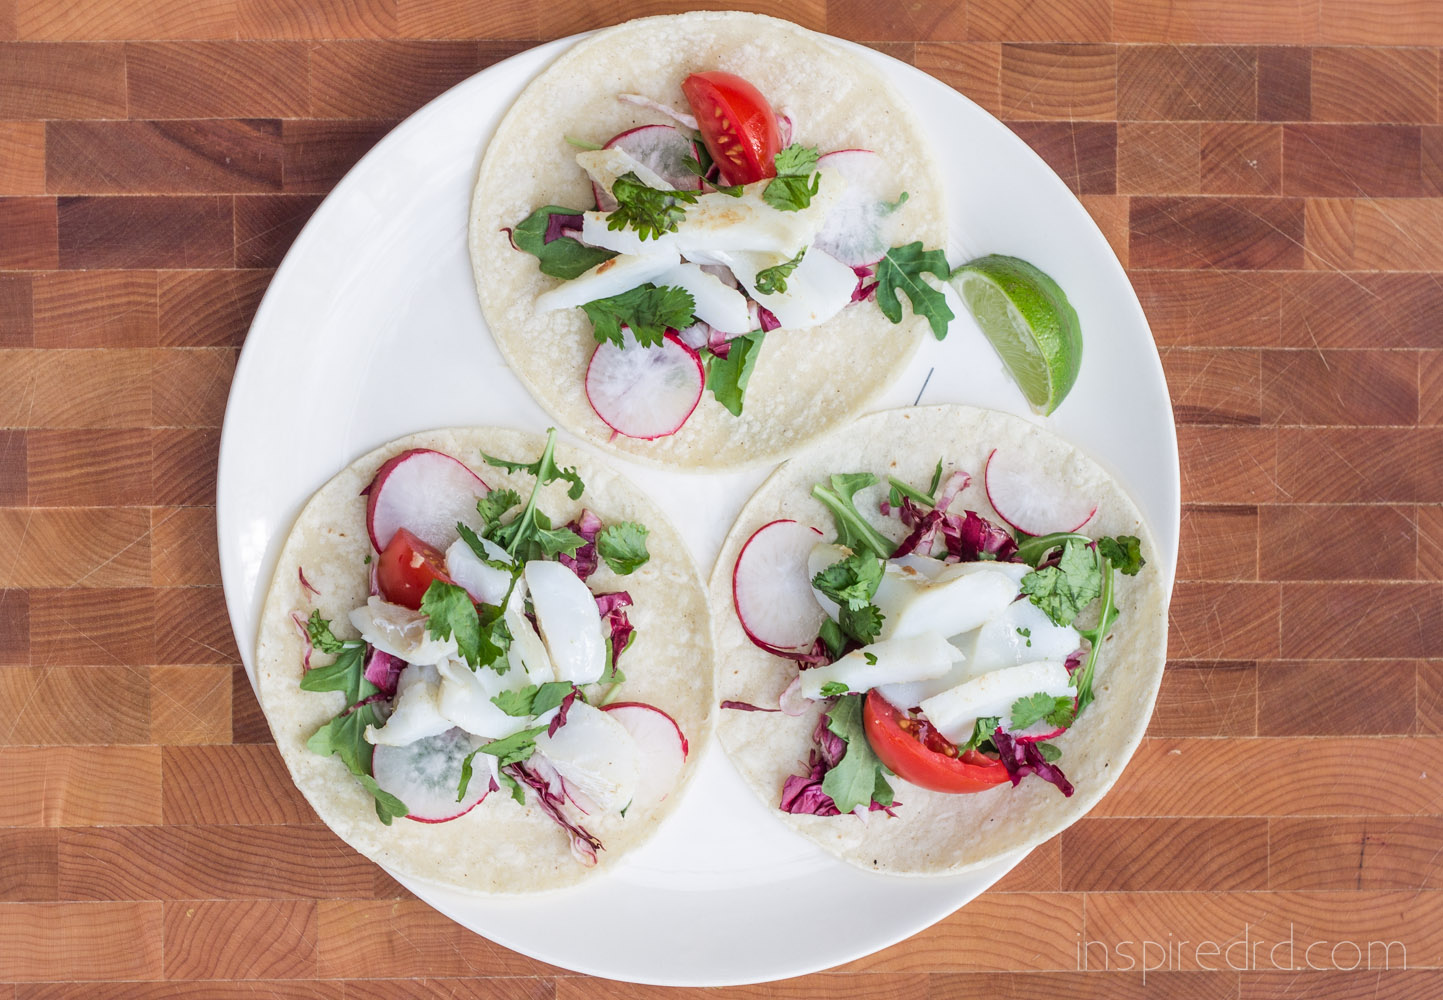 Simple Fish Tacos #glutenfree